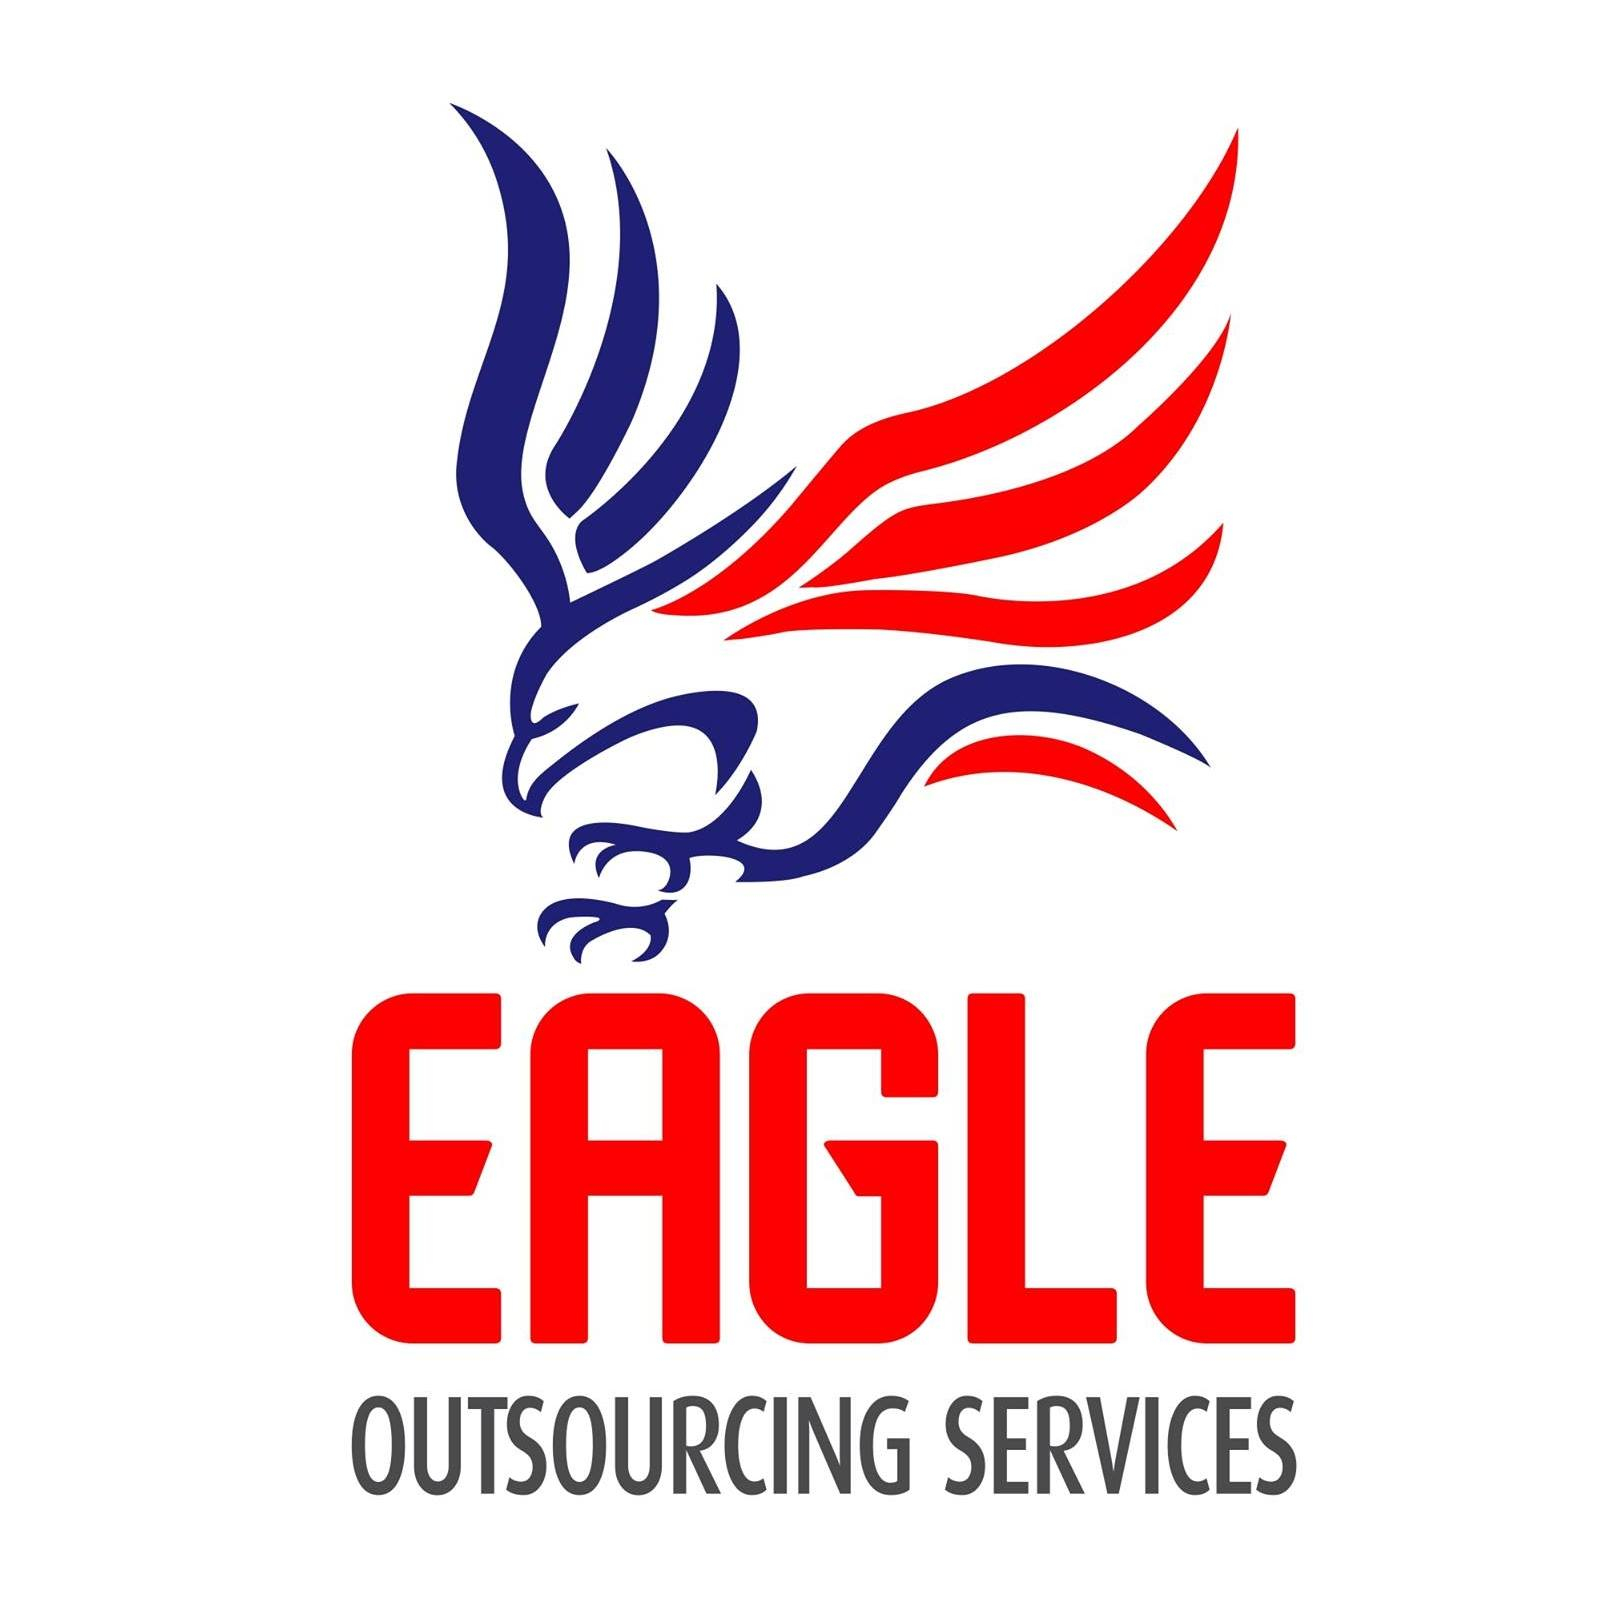 eagleoutsourcing